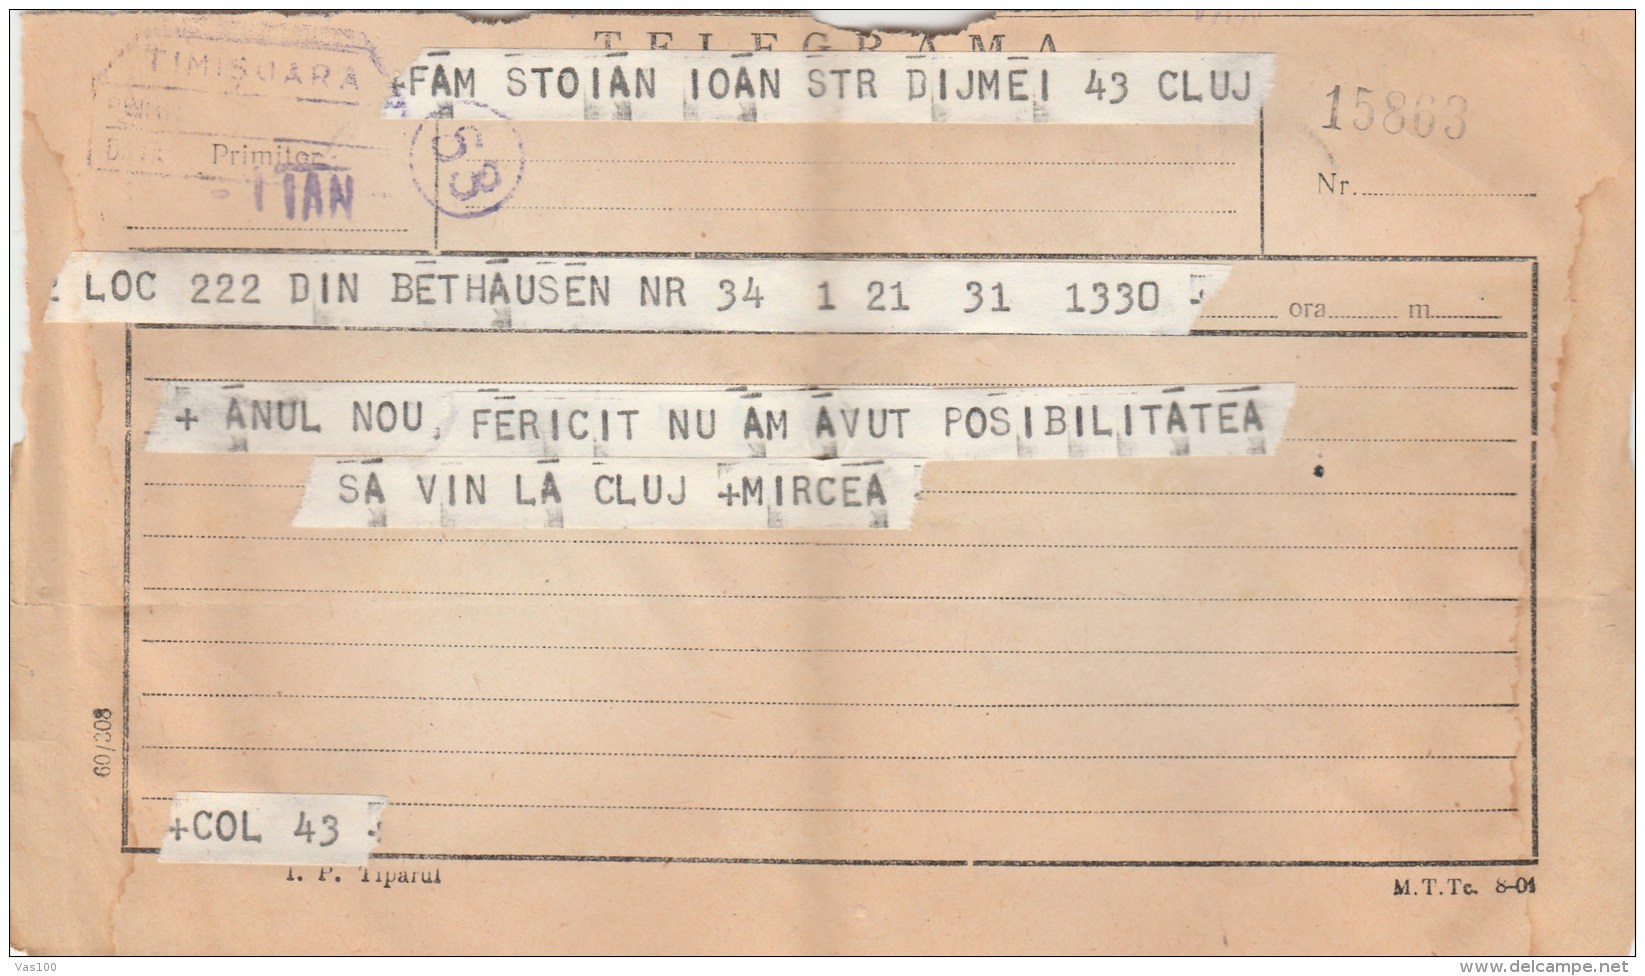 #BV3256  TELEGRAM, FROM TIMISOARA TO CLUJ, 1955, ROMANIA. - Télégraphes